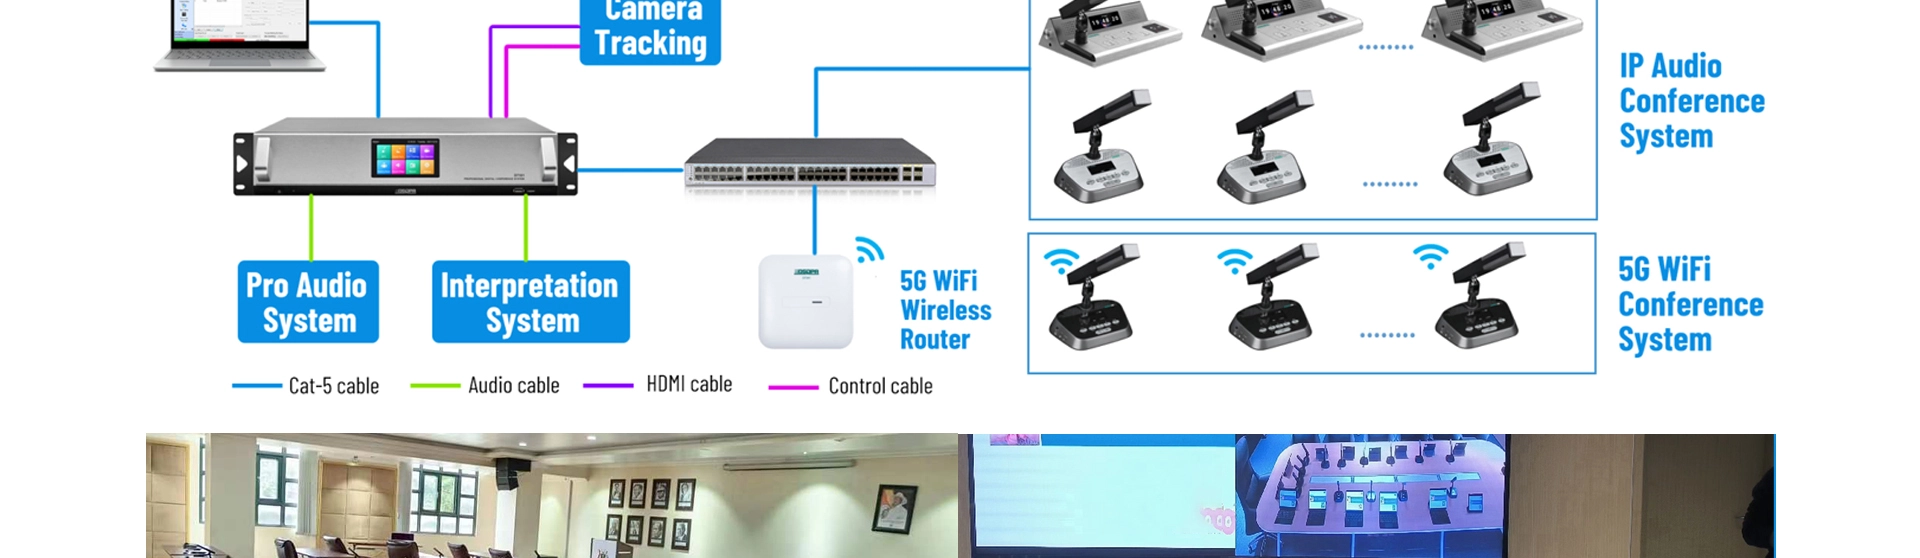 Wireless Conference System 5G WiFi Wireless Digital Voting Chairman Unit